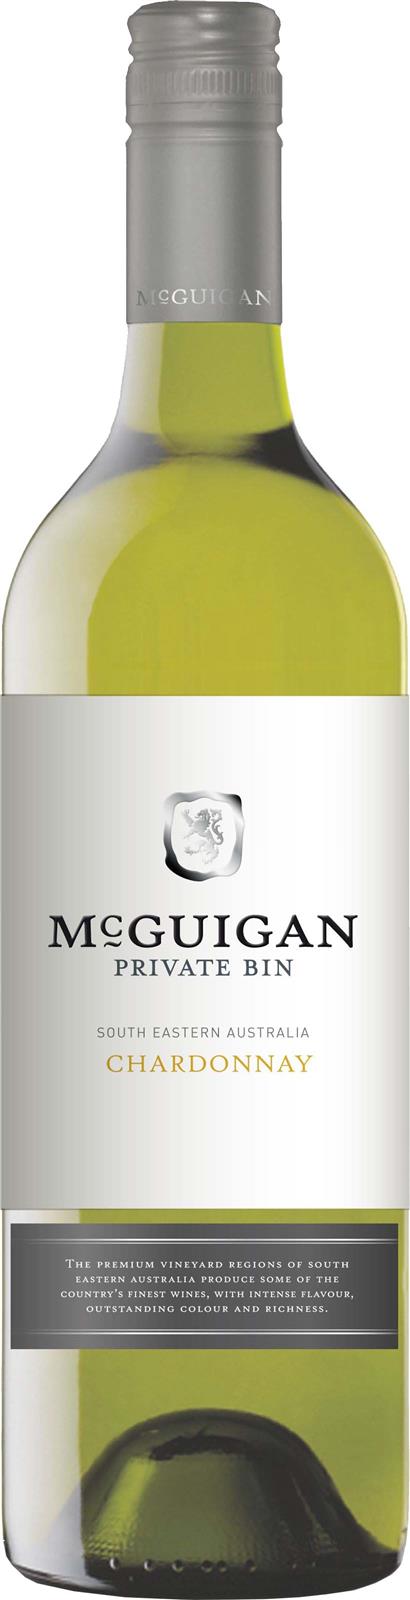 McGuigan Private Bin Chardonnay 2017 (Australia)